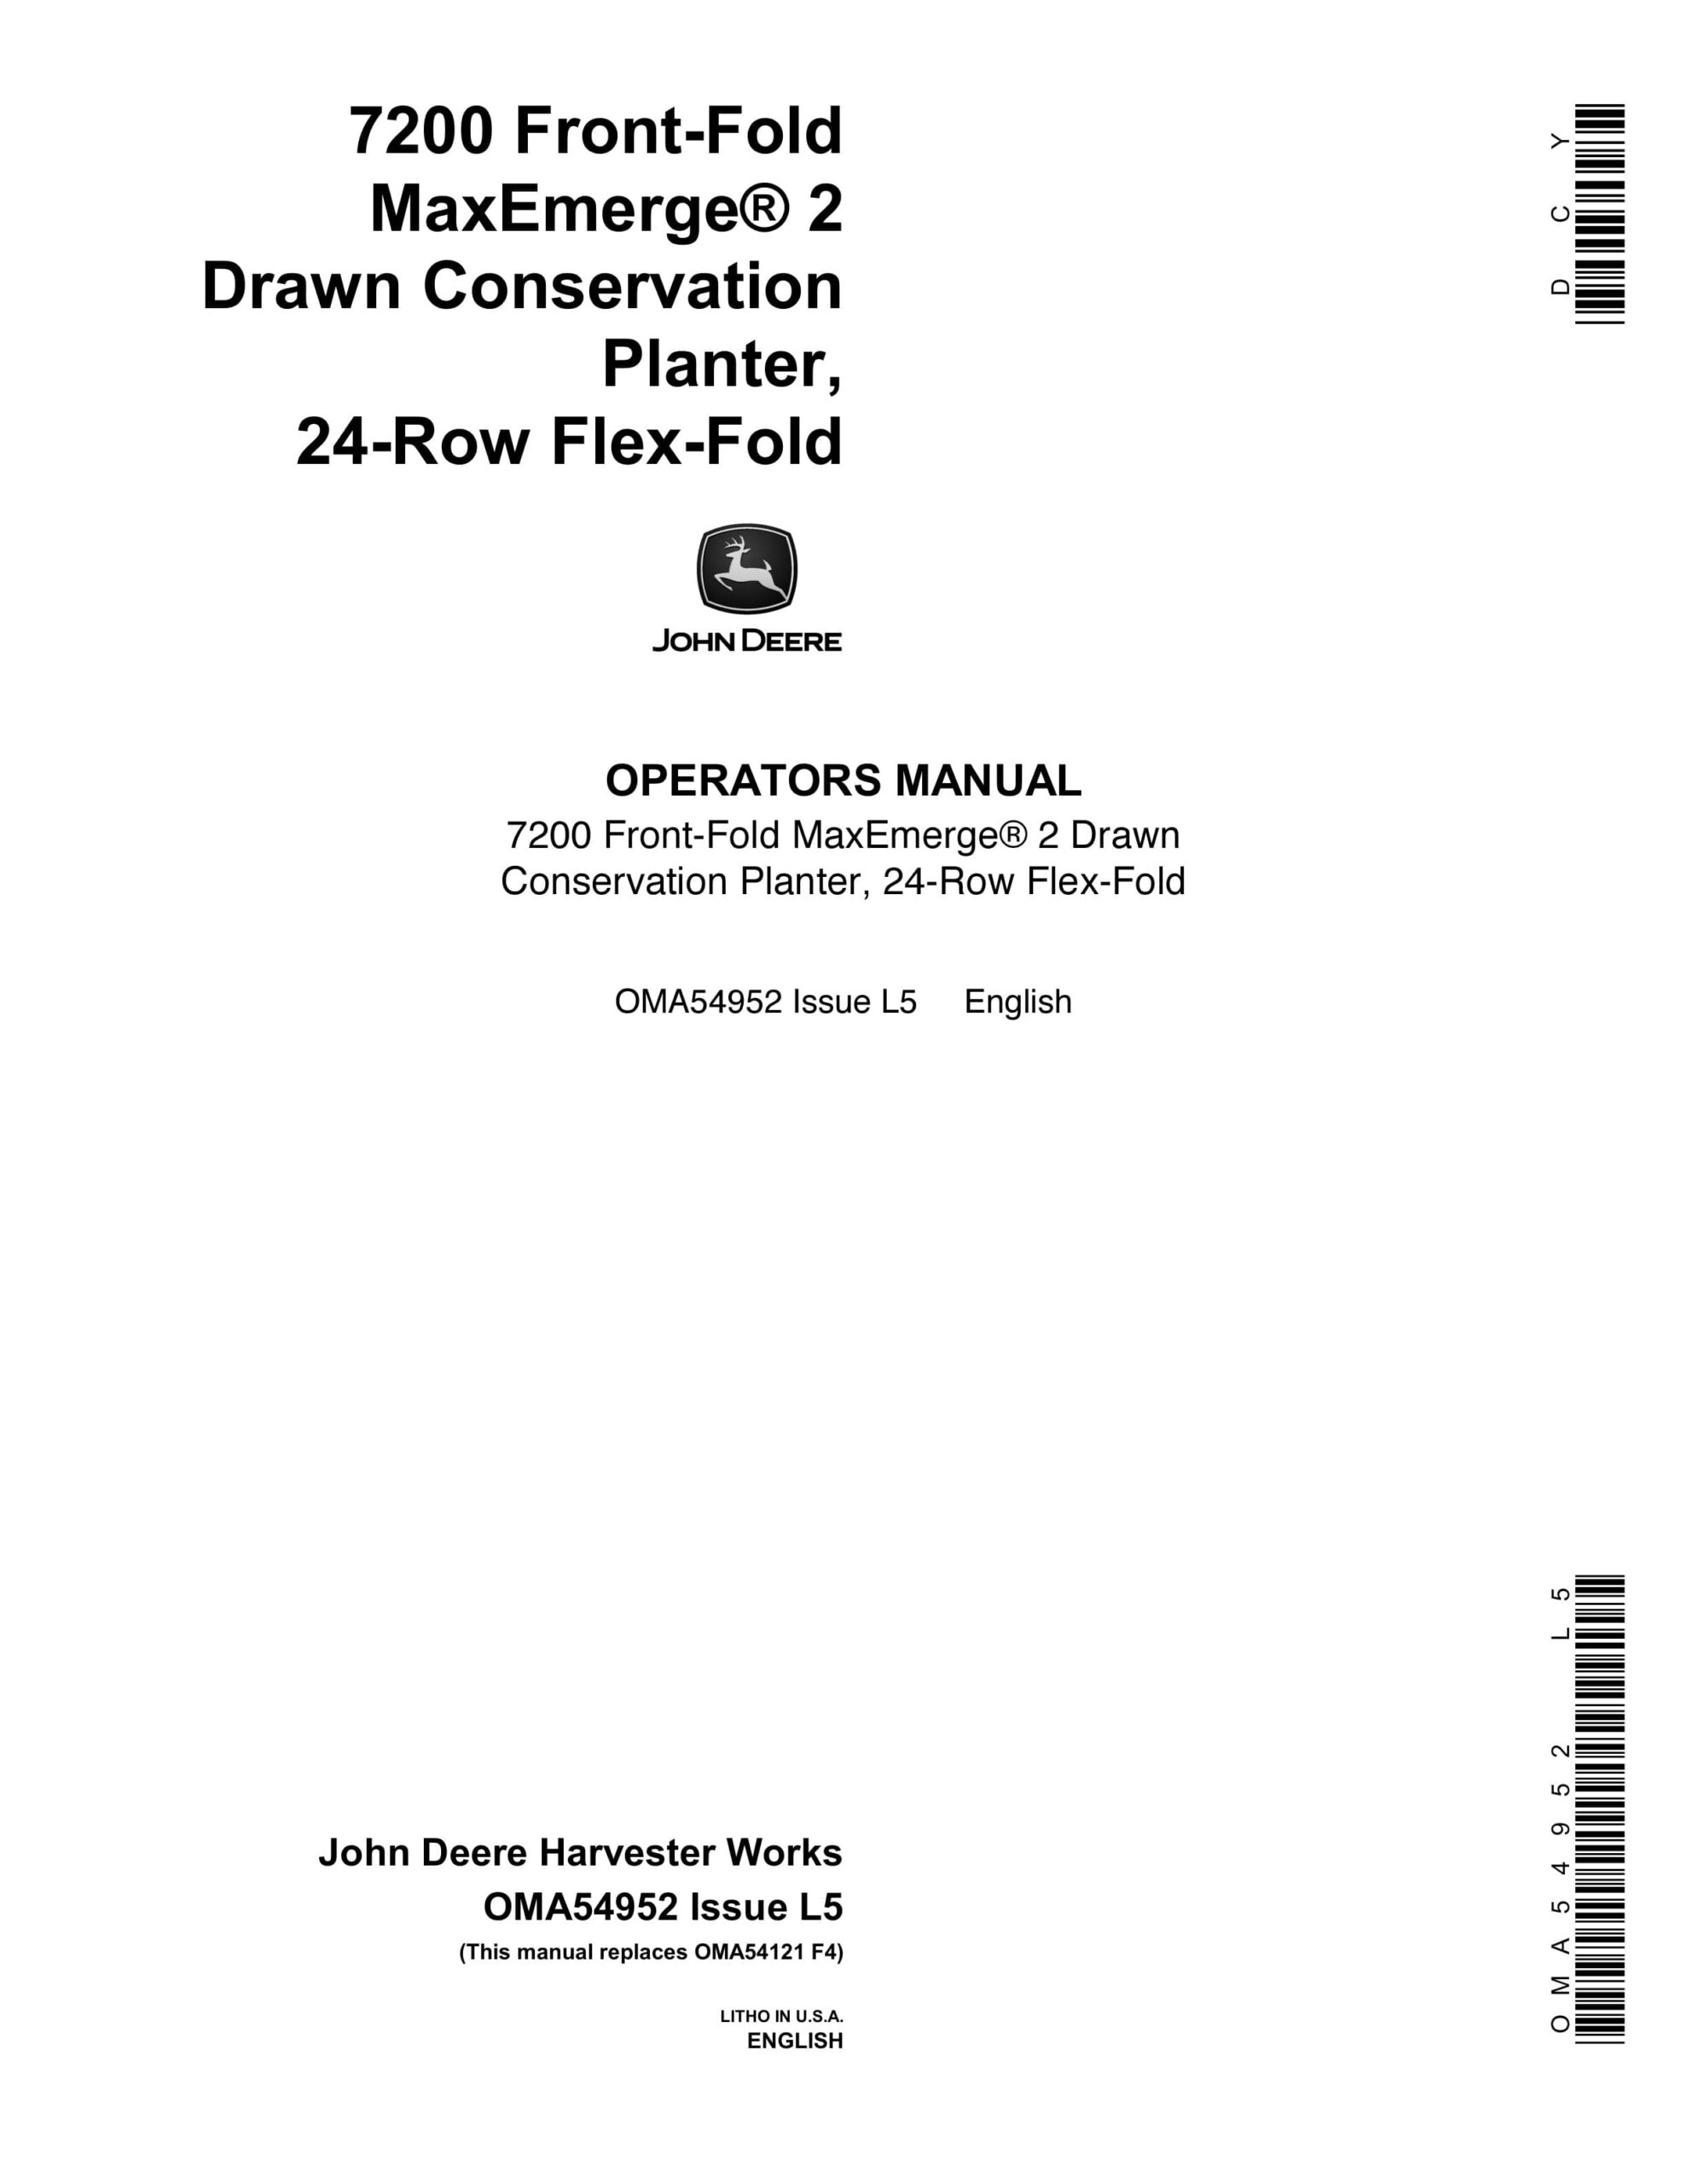 John Deere 7200 Front-Fold MaxEmerge 2 Drawn Conservation Planter, 24 Operator Manual OMA54952-1